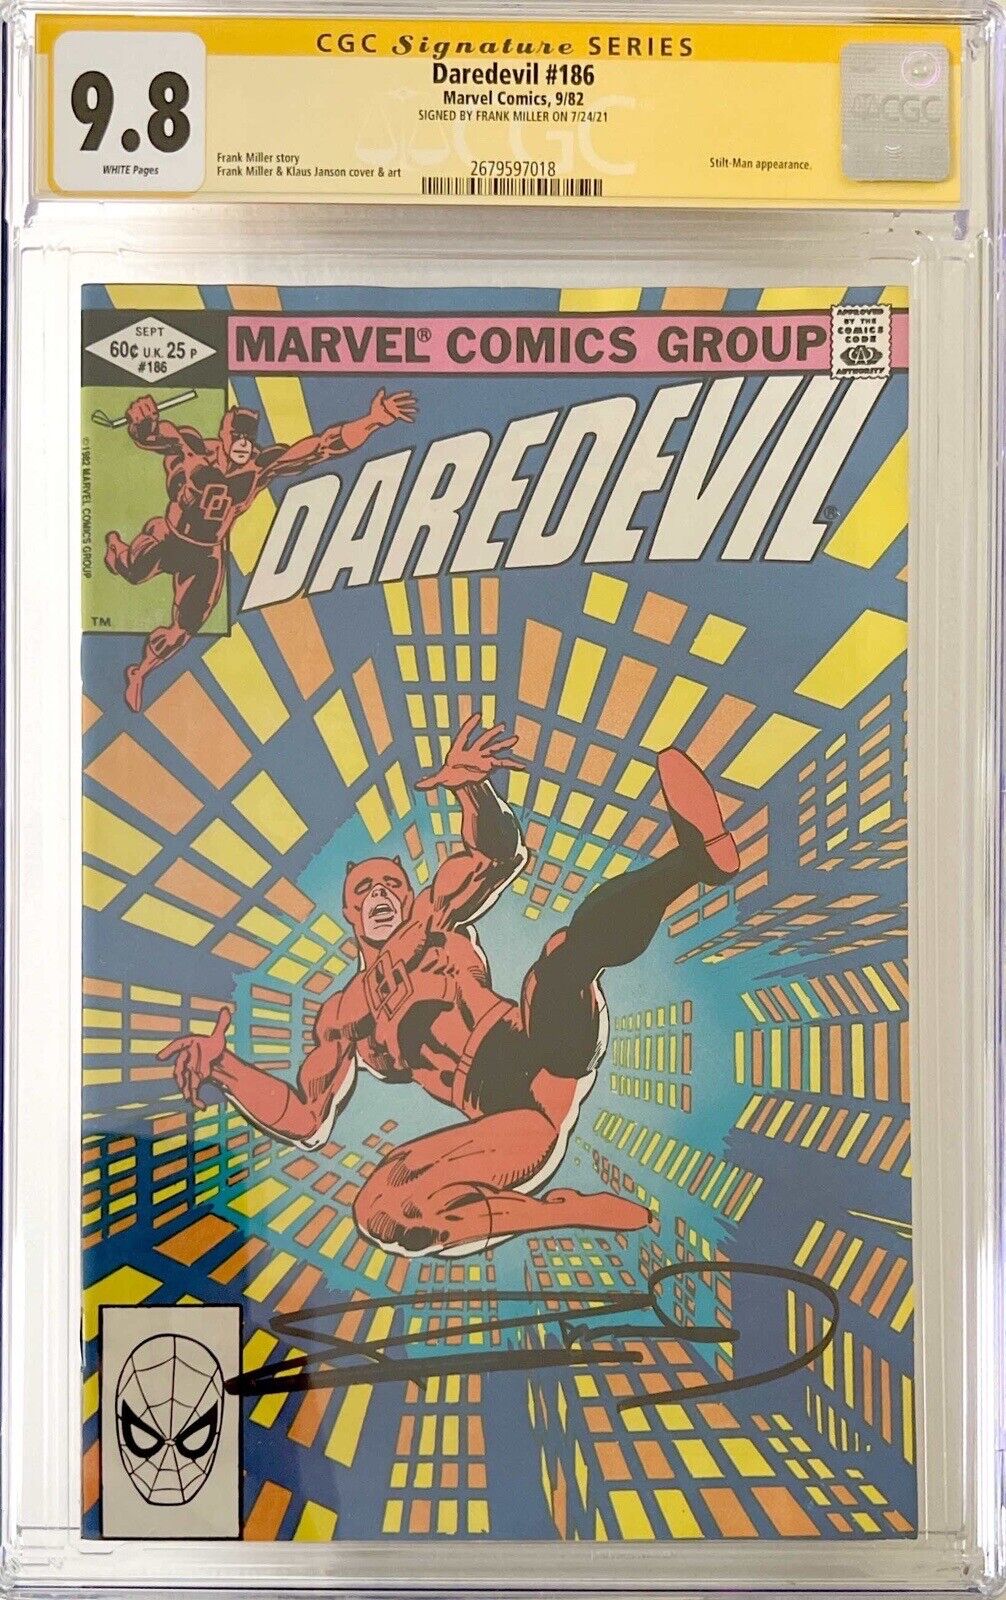 Frank Miller signed Daredevil #186, Marvel Comics 9/82, CGC 9.8